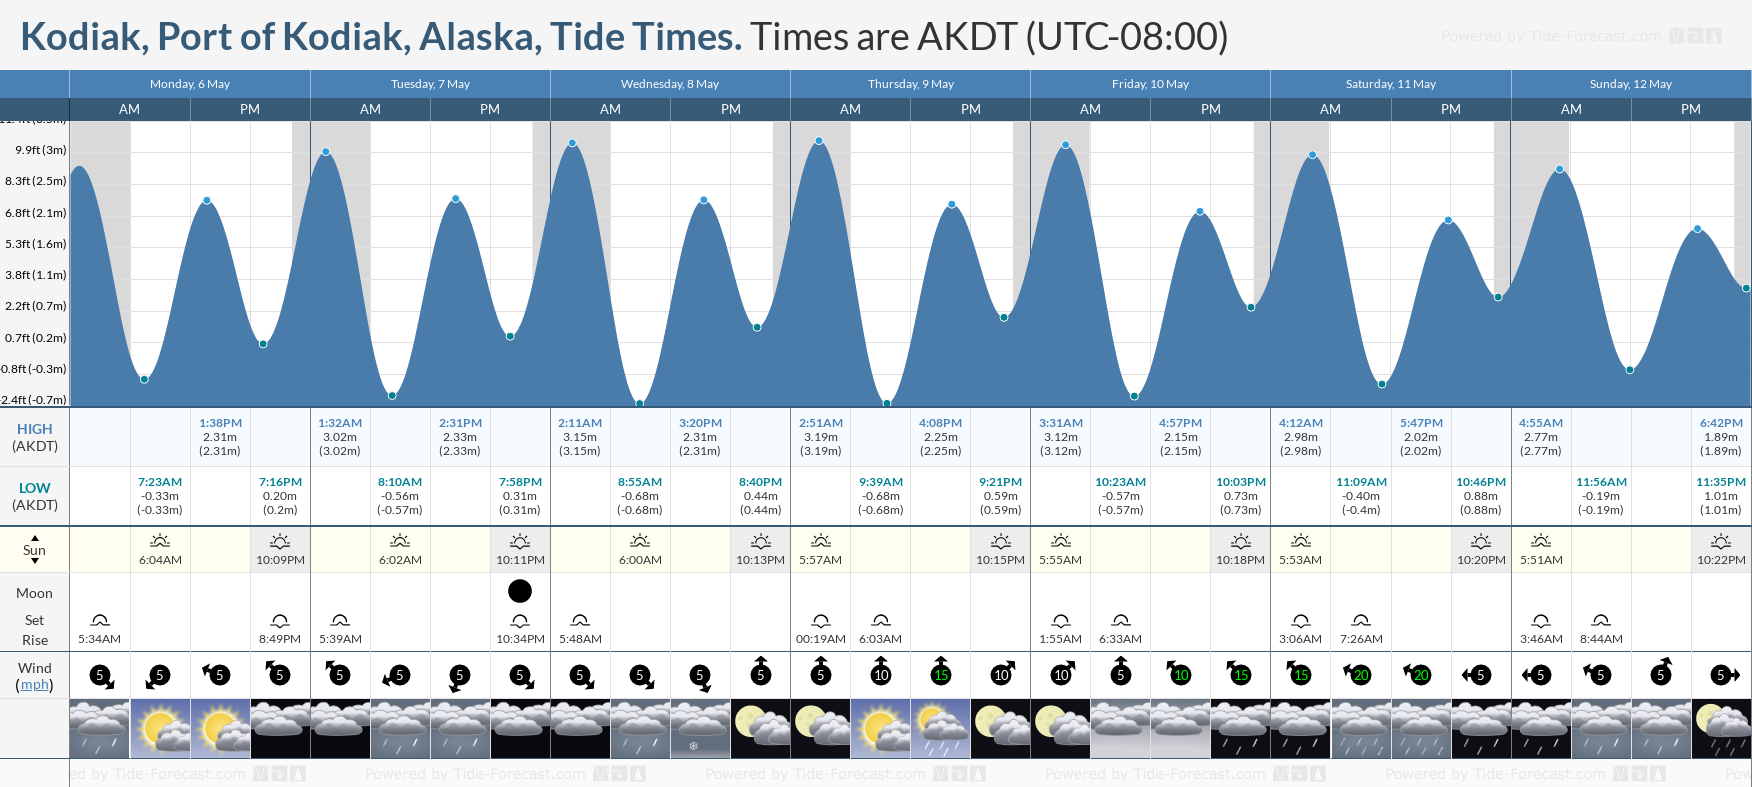 Kodiak, Port of Kodiak, Alaska Tide Chart including high and low tide tide times for the next 7 days